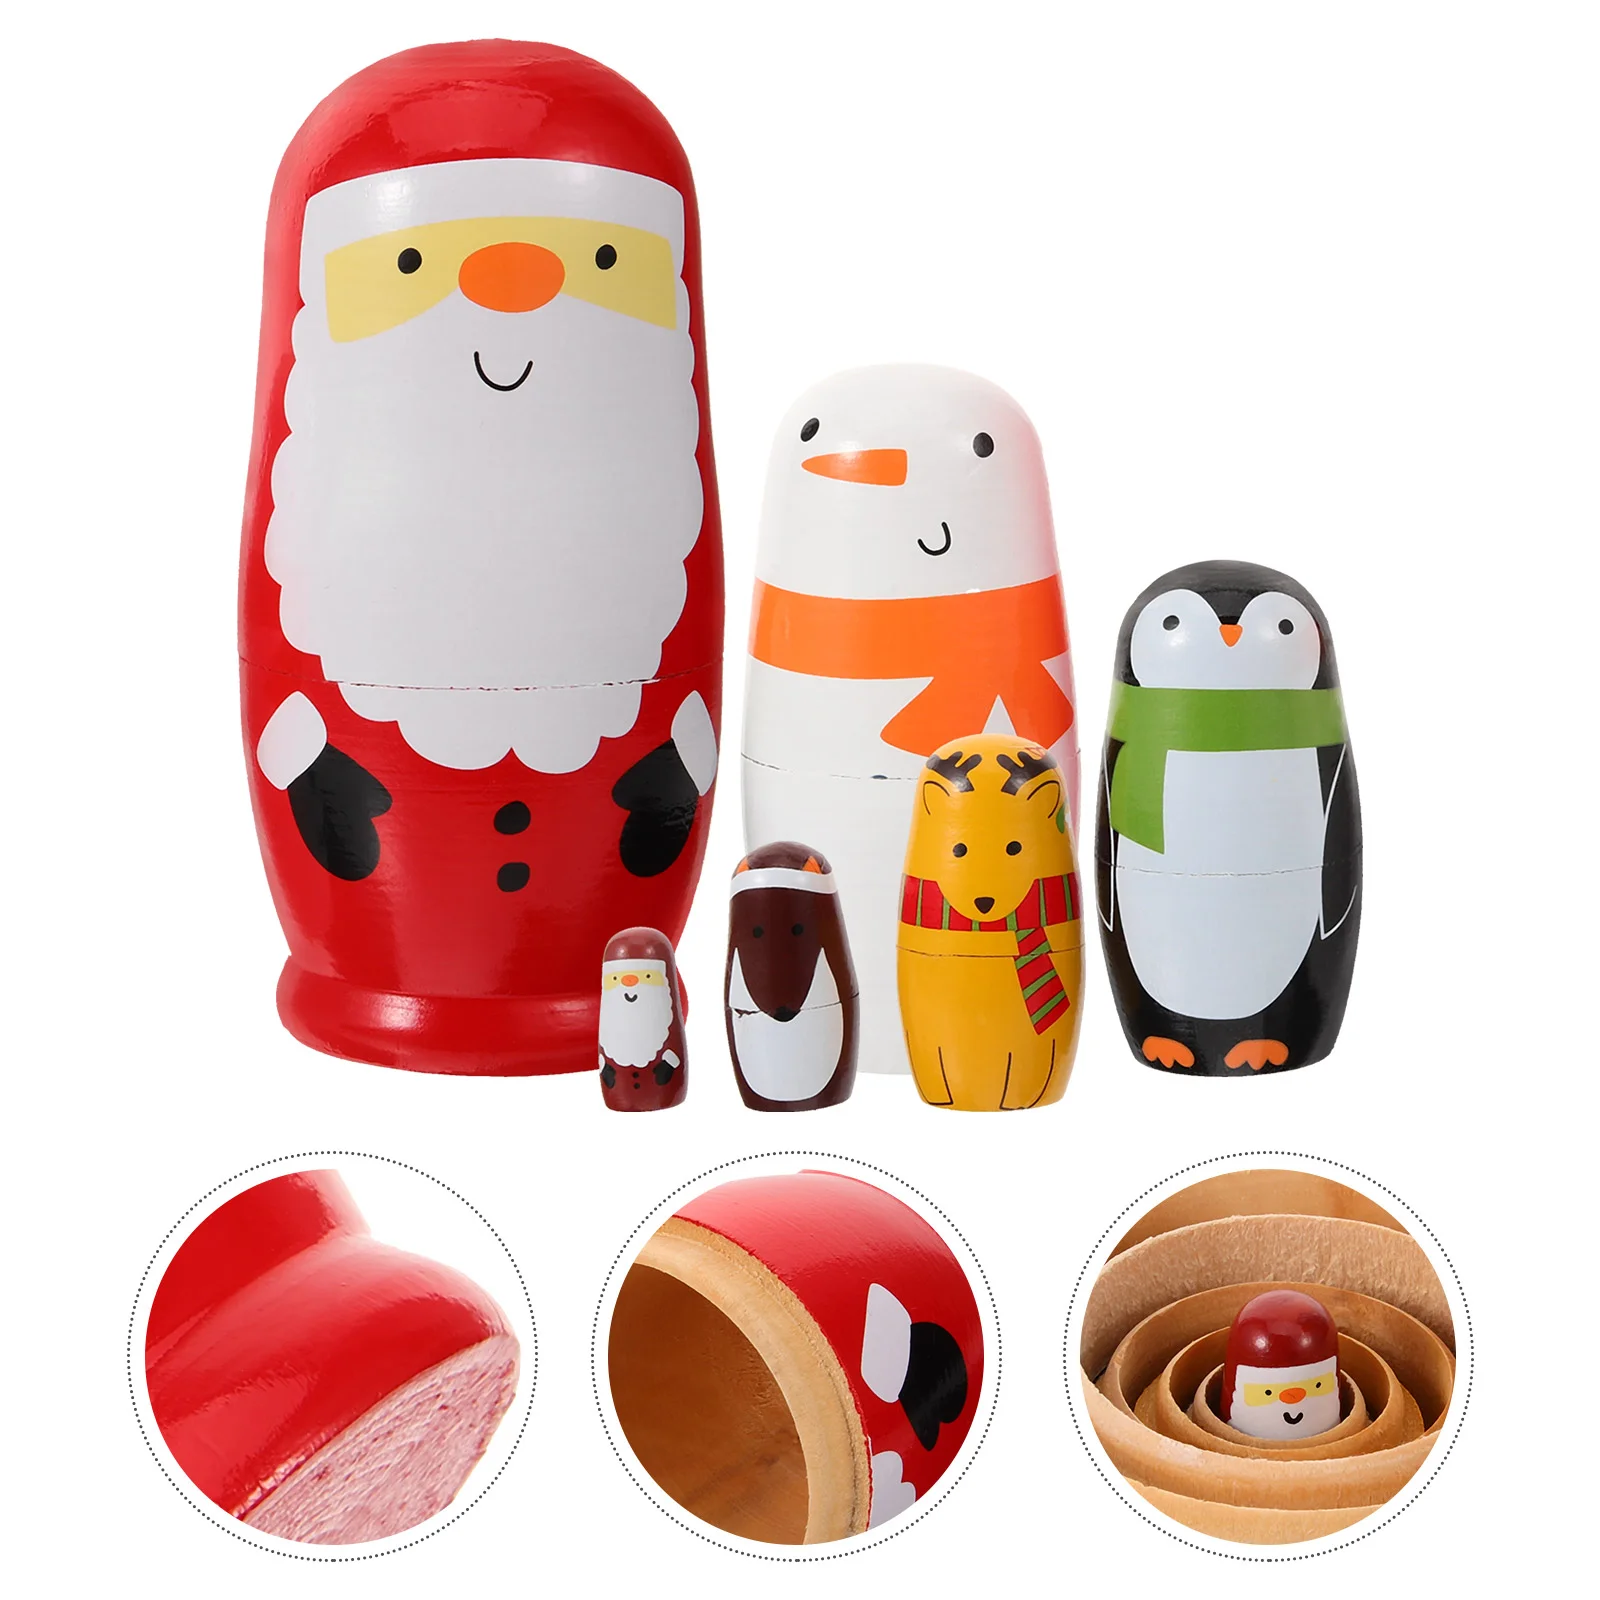 

5/6pcs Santa Claus Russian Nesting Dolls Handmade Wooden Matryoshka Toys Kids Christmas New Year Gift